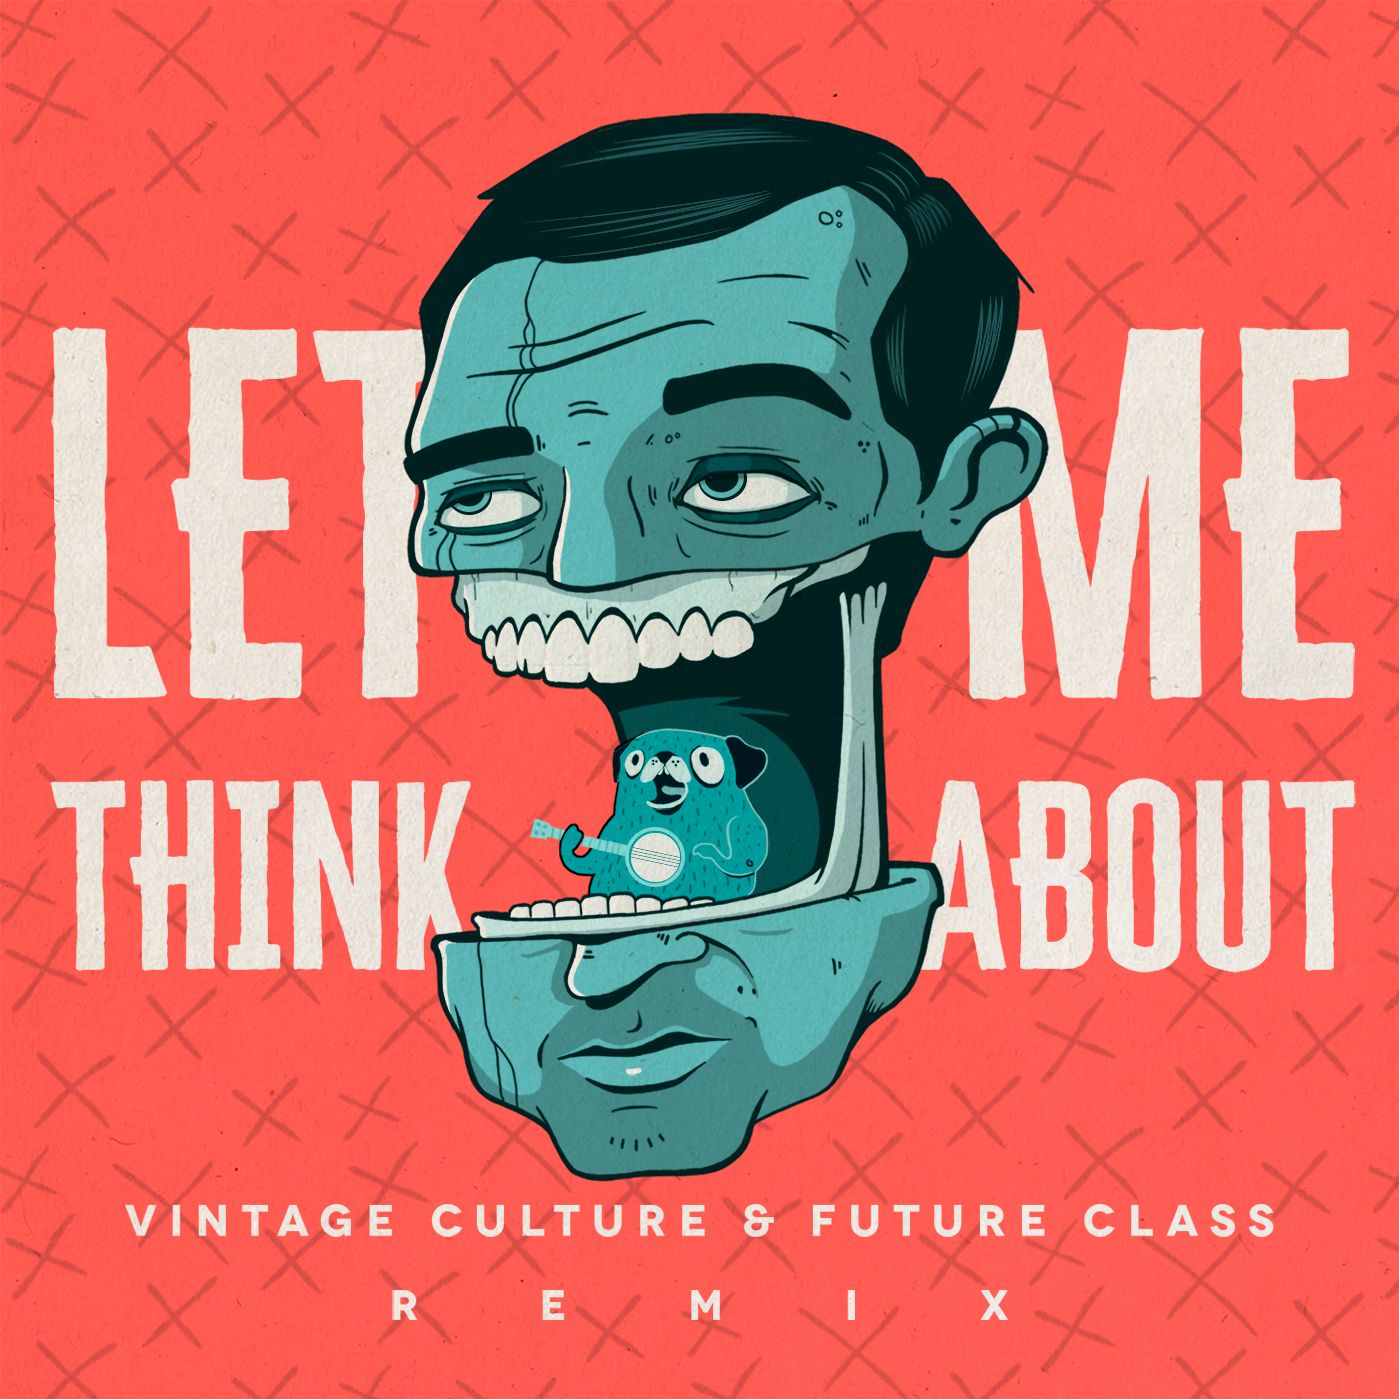 Soo dejiso Vintage Culture & Future Class - Let Me Think About